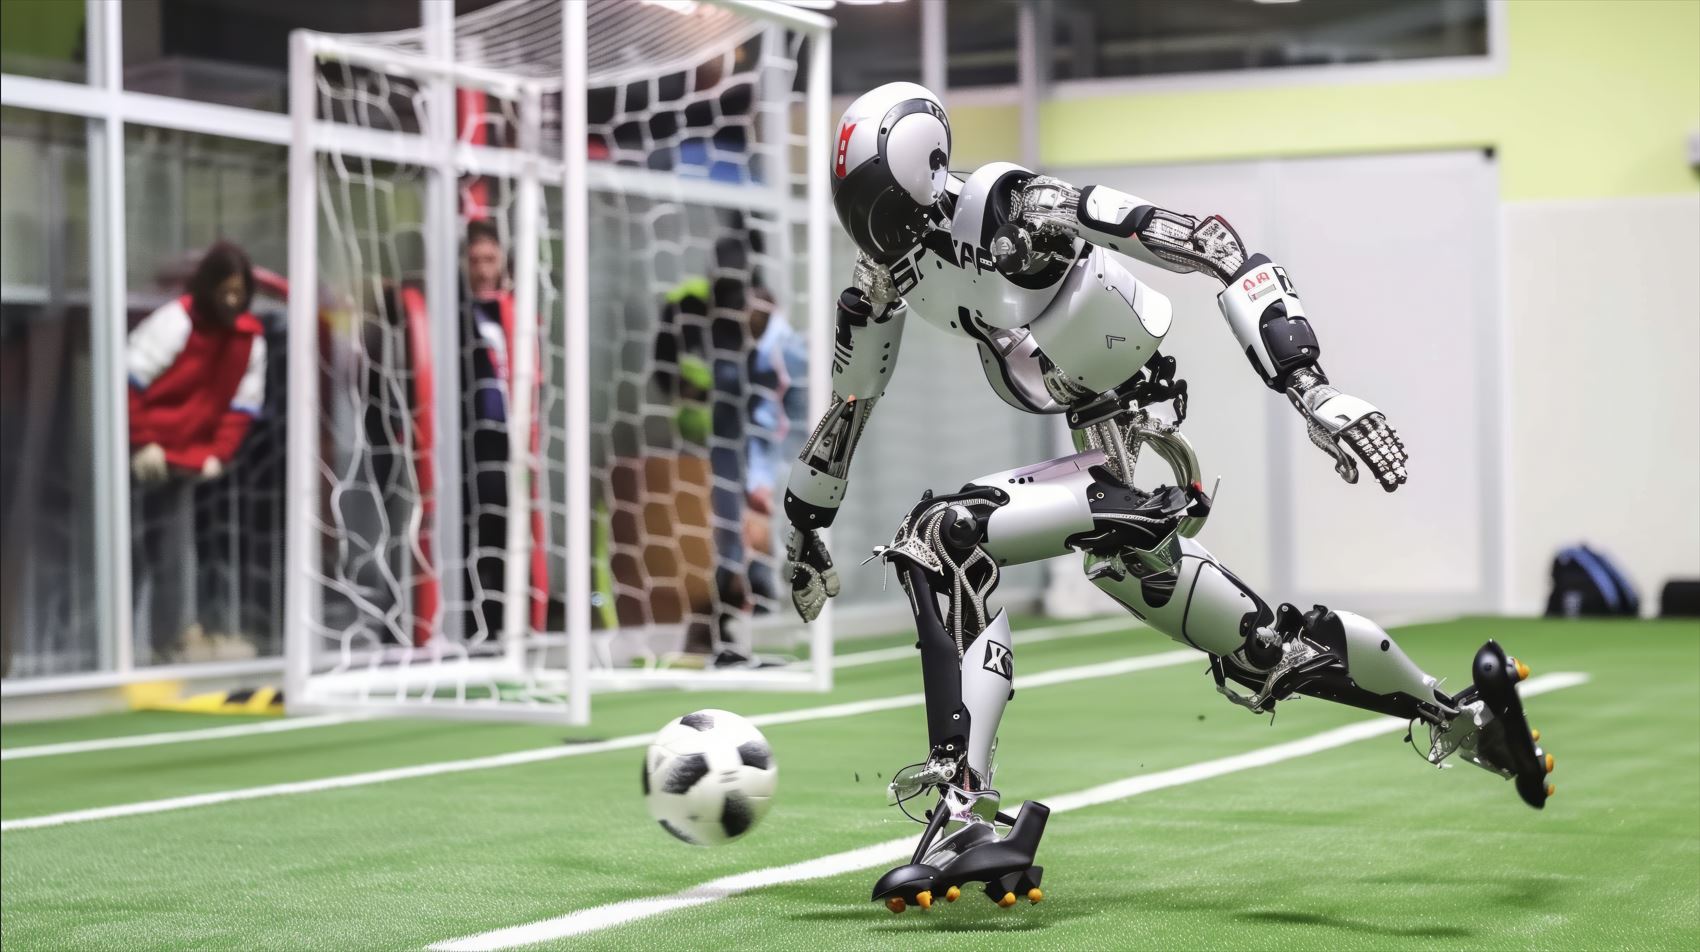 Stock image of robot playing football